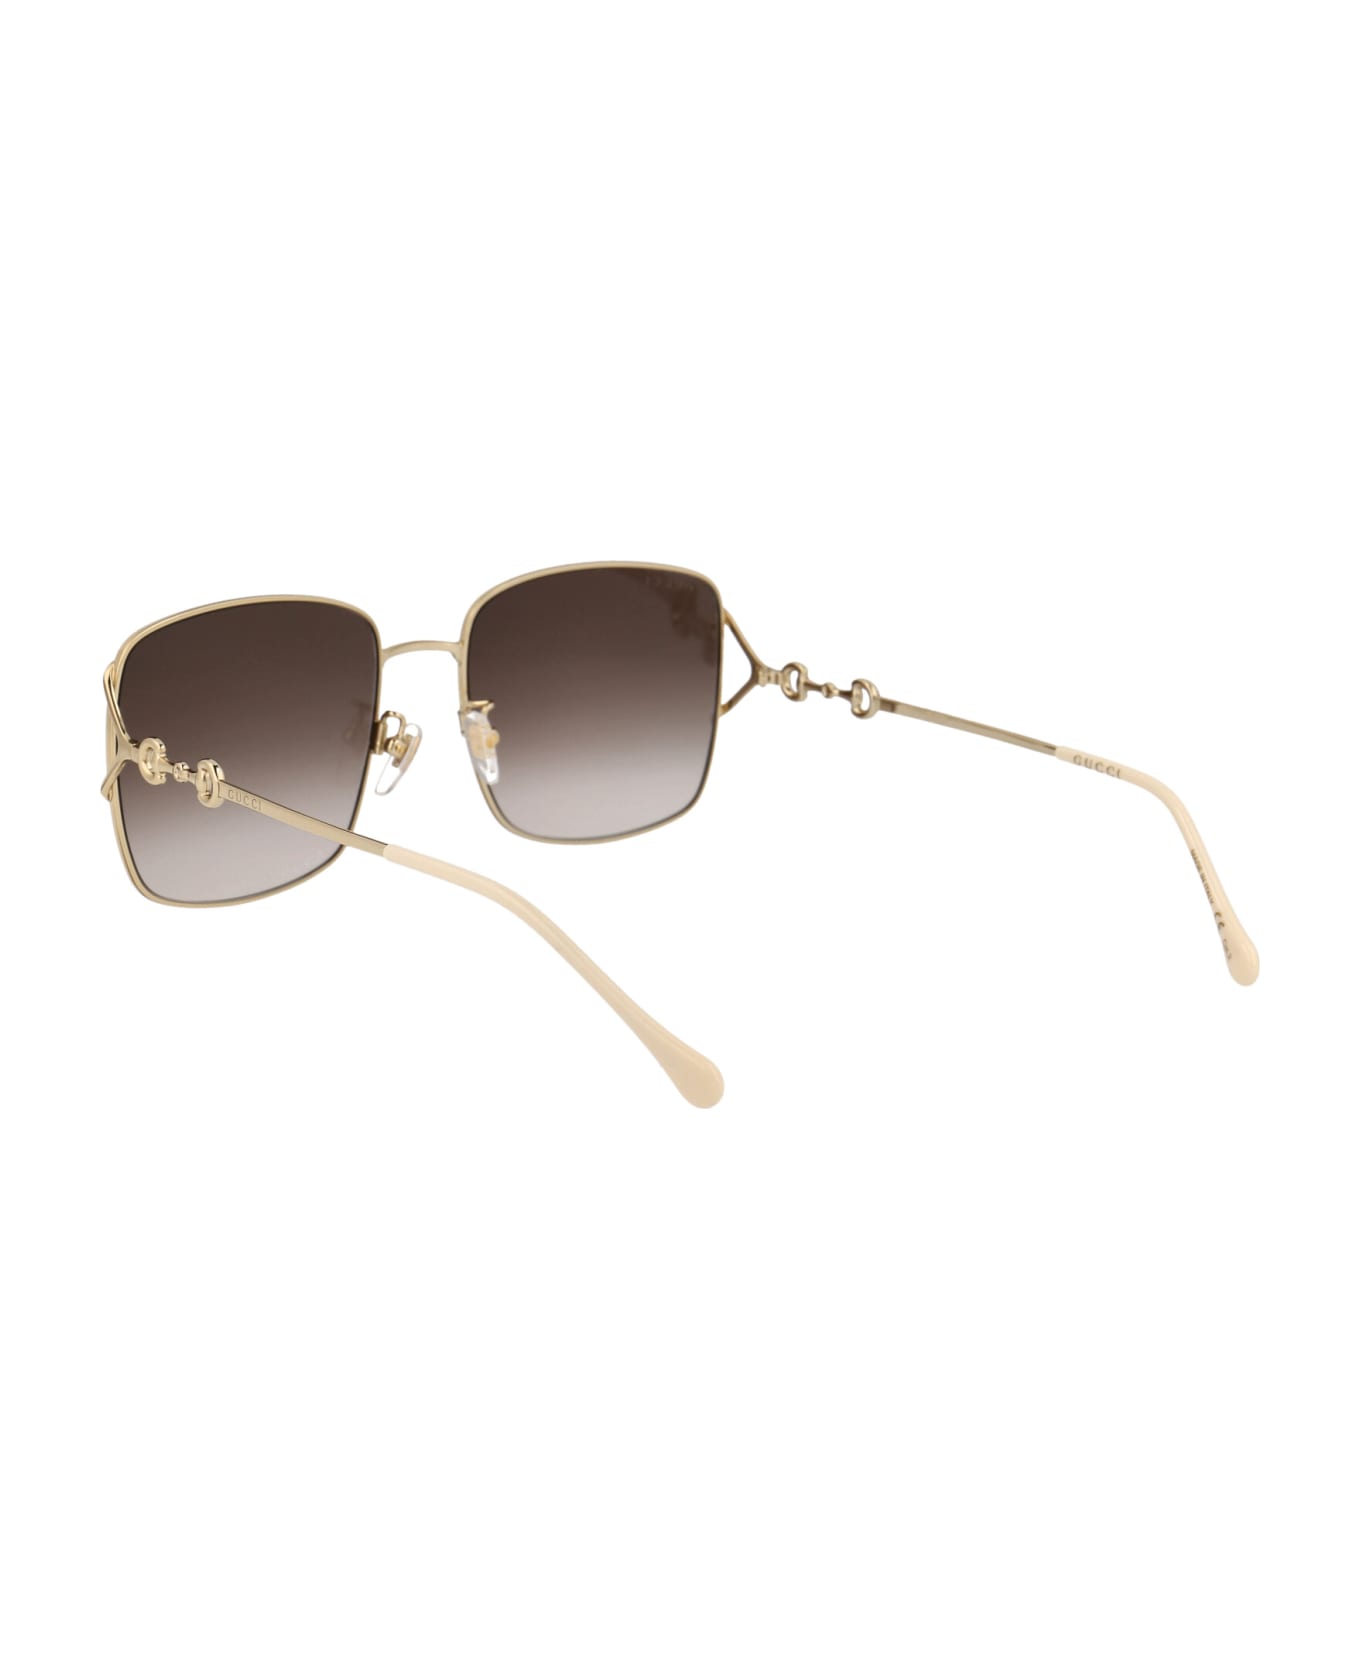 Gucci Eyewear Gg1018sk Sunglasses - 003 GOLD GOLD BROWN サングラス